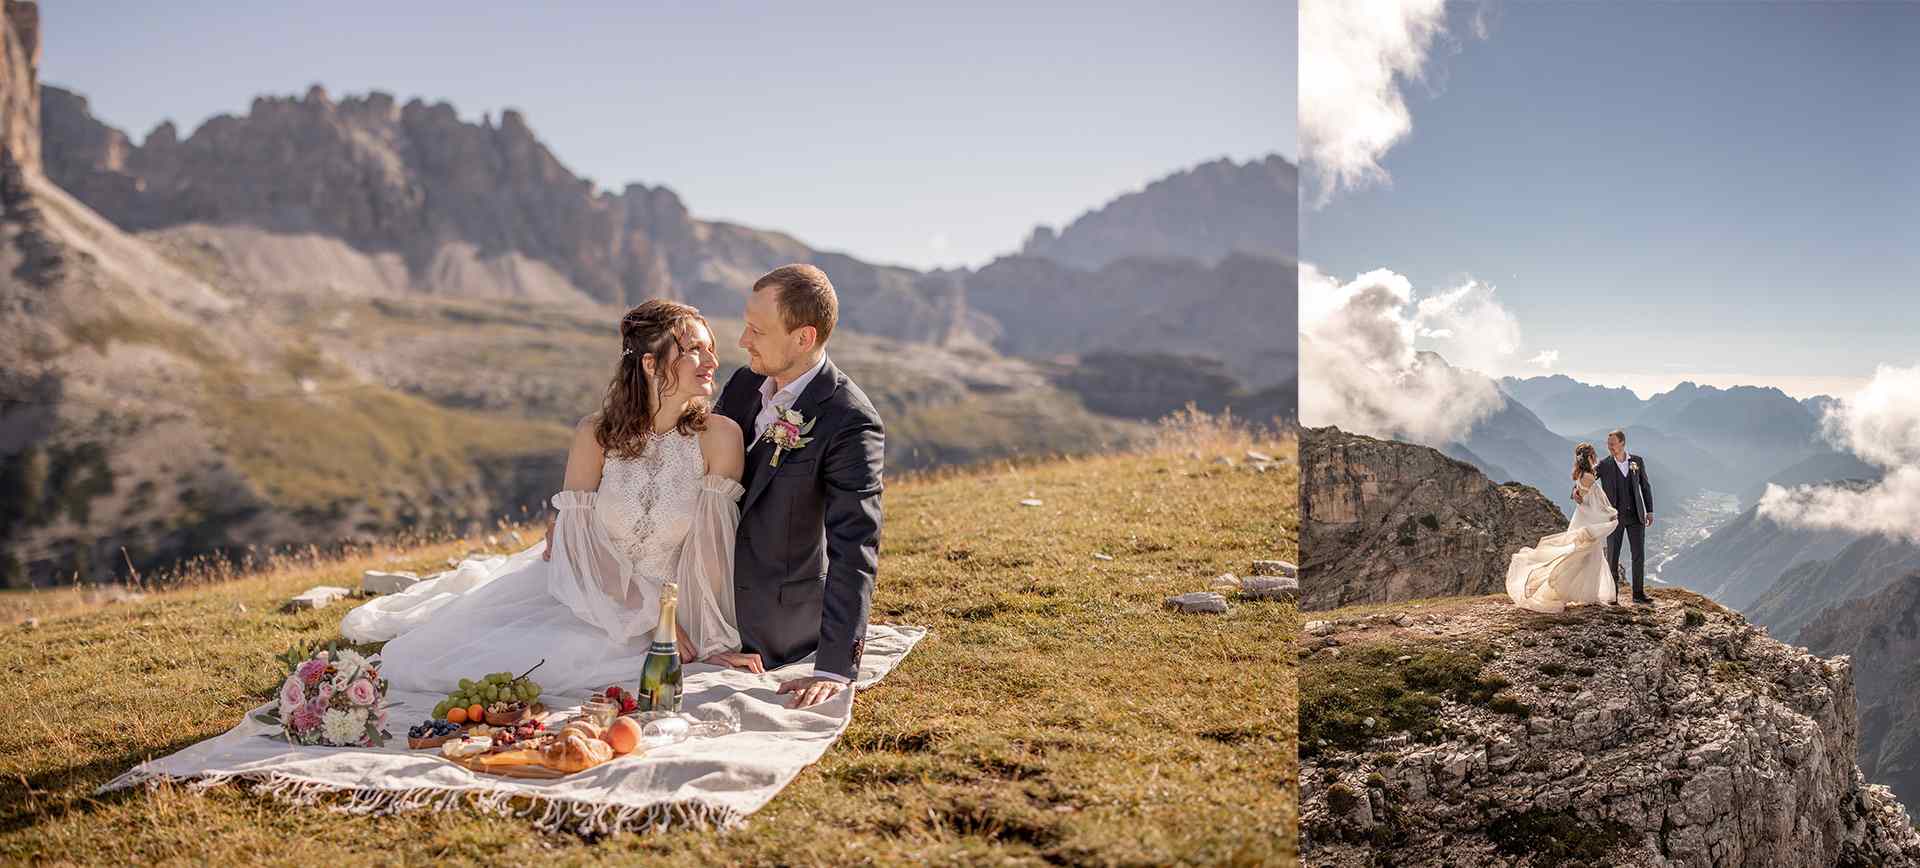 dolomites mountain elopement wedding in italy